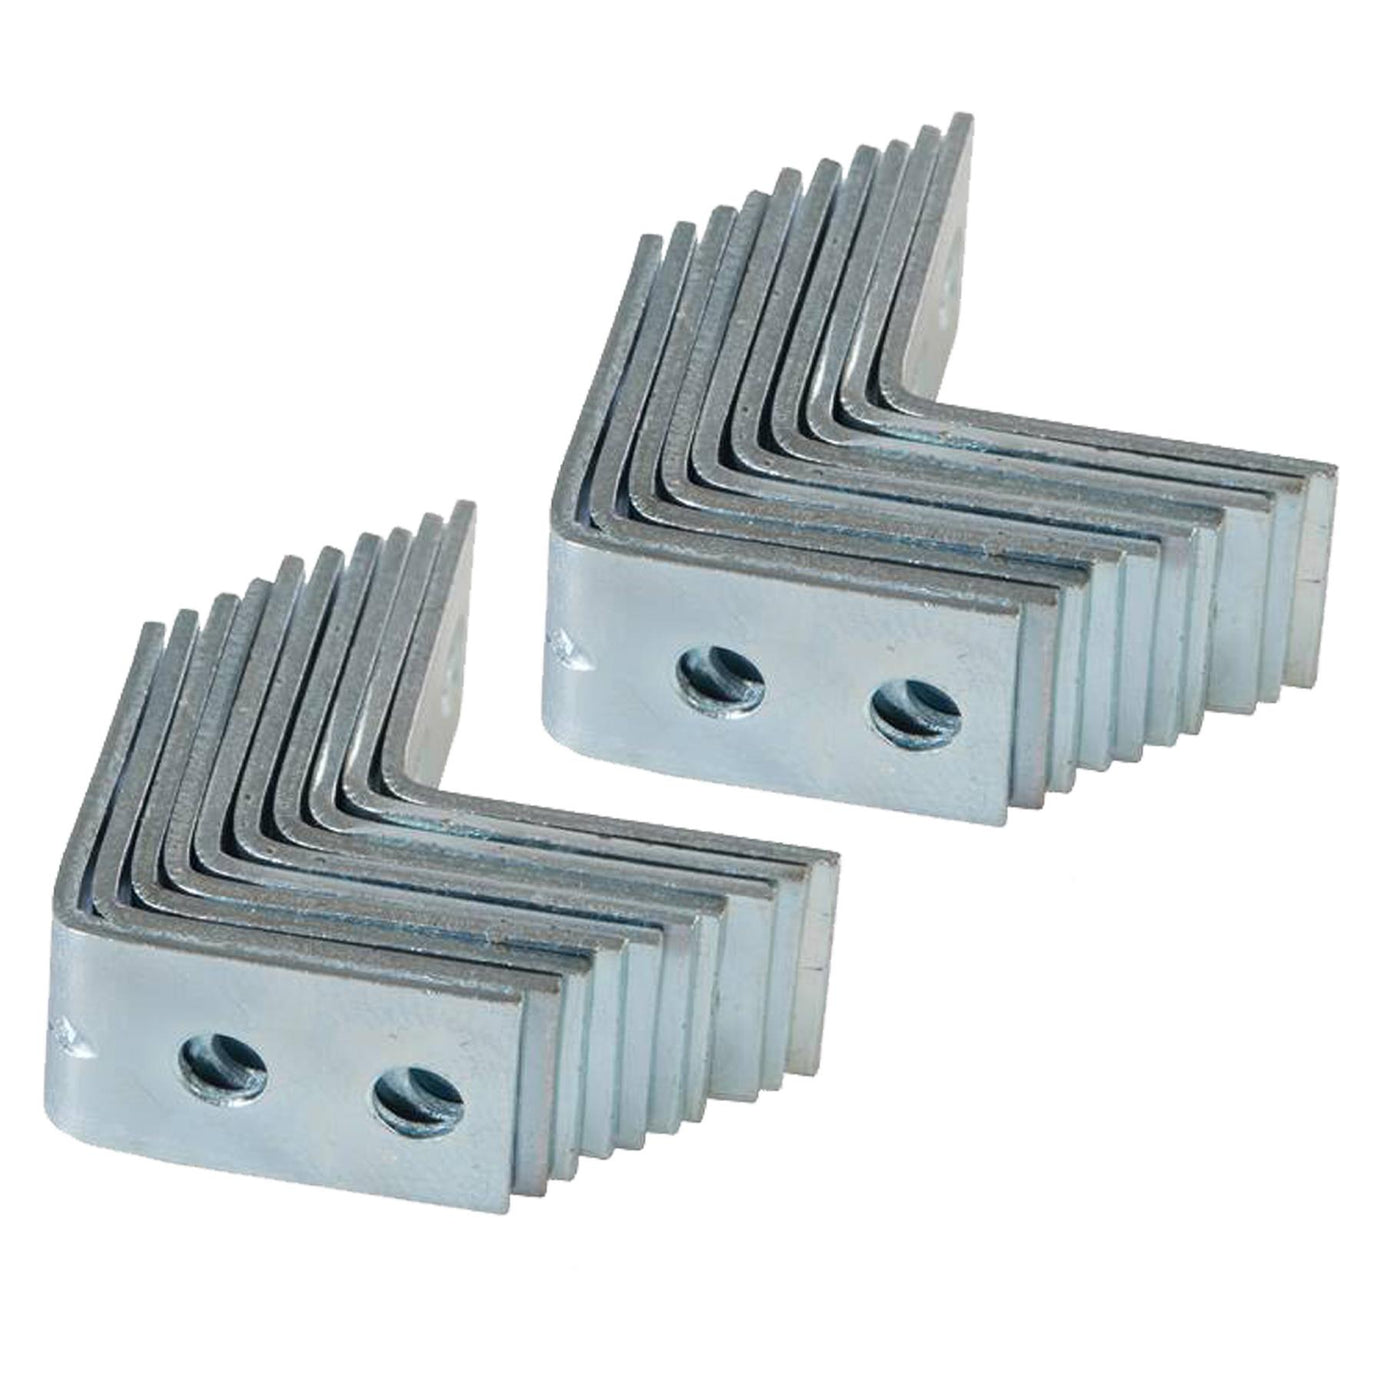 Metal Angle Brackets 90 Degree 25 x 1.6 x 16mm Corner Braces for shelf fence 20PC